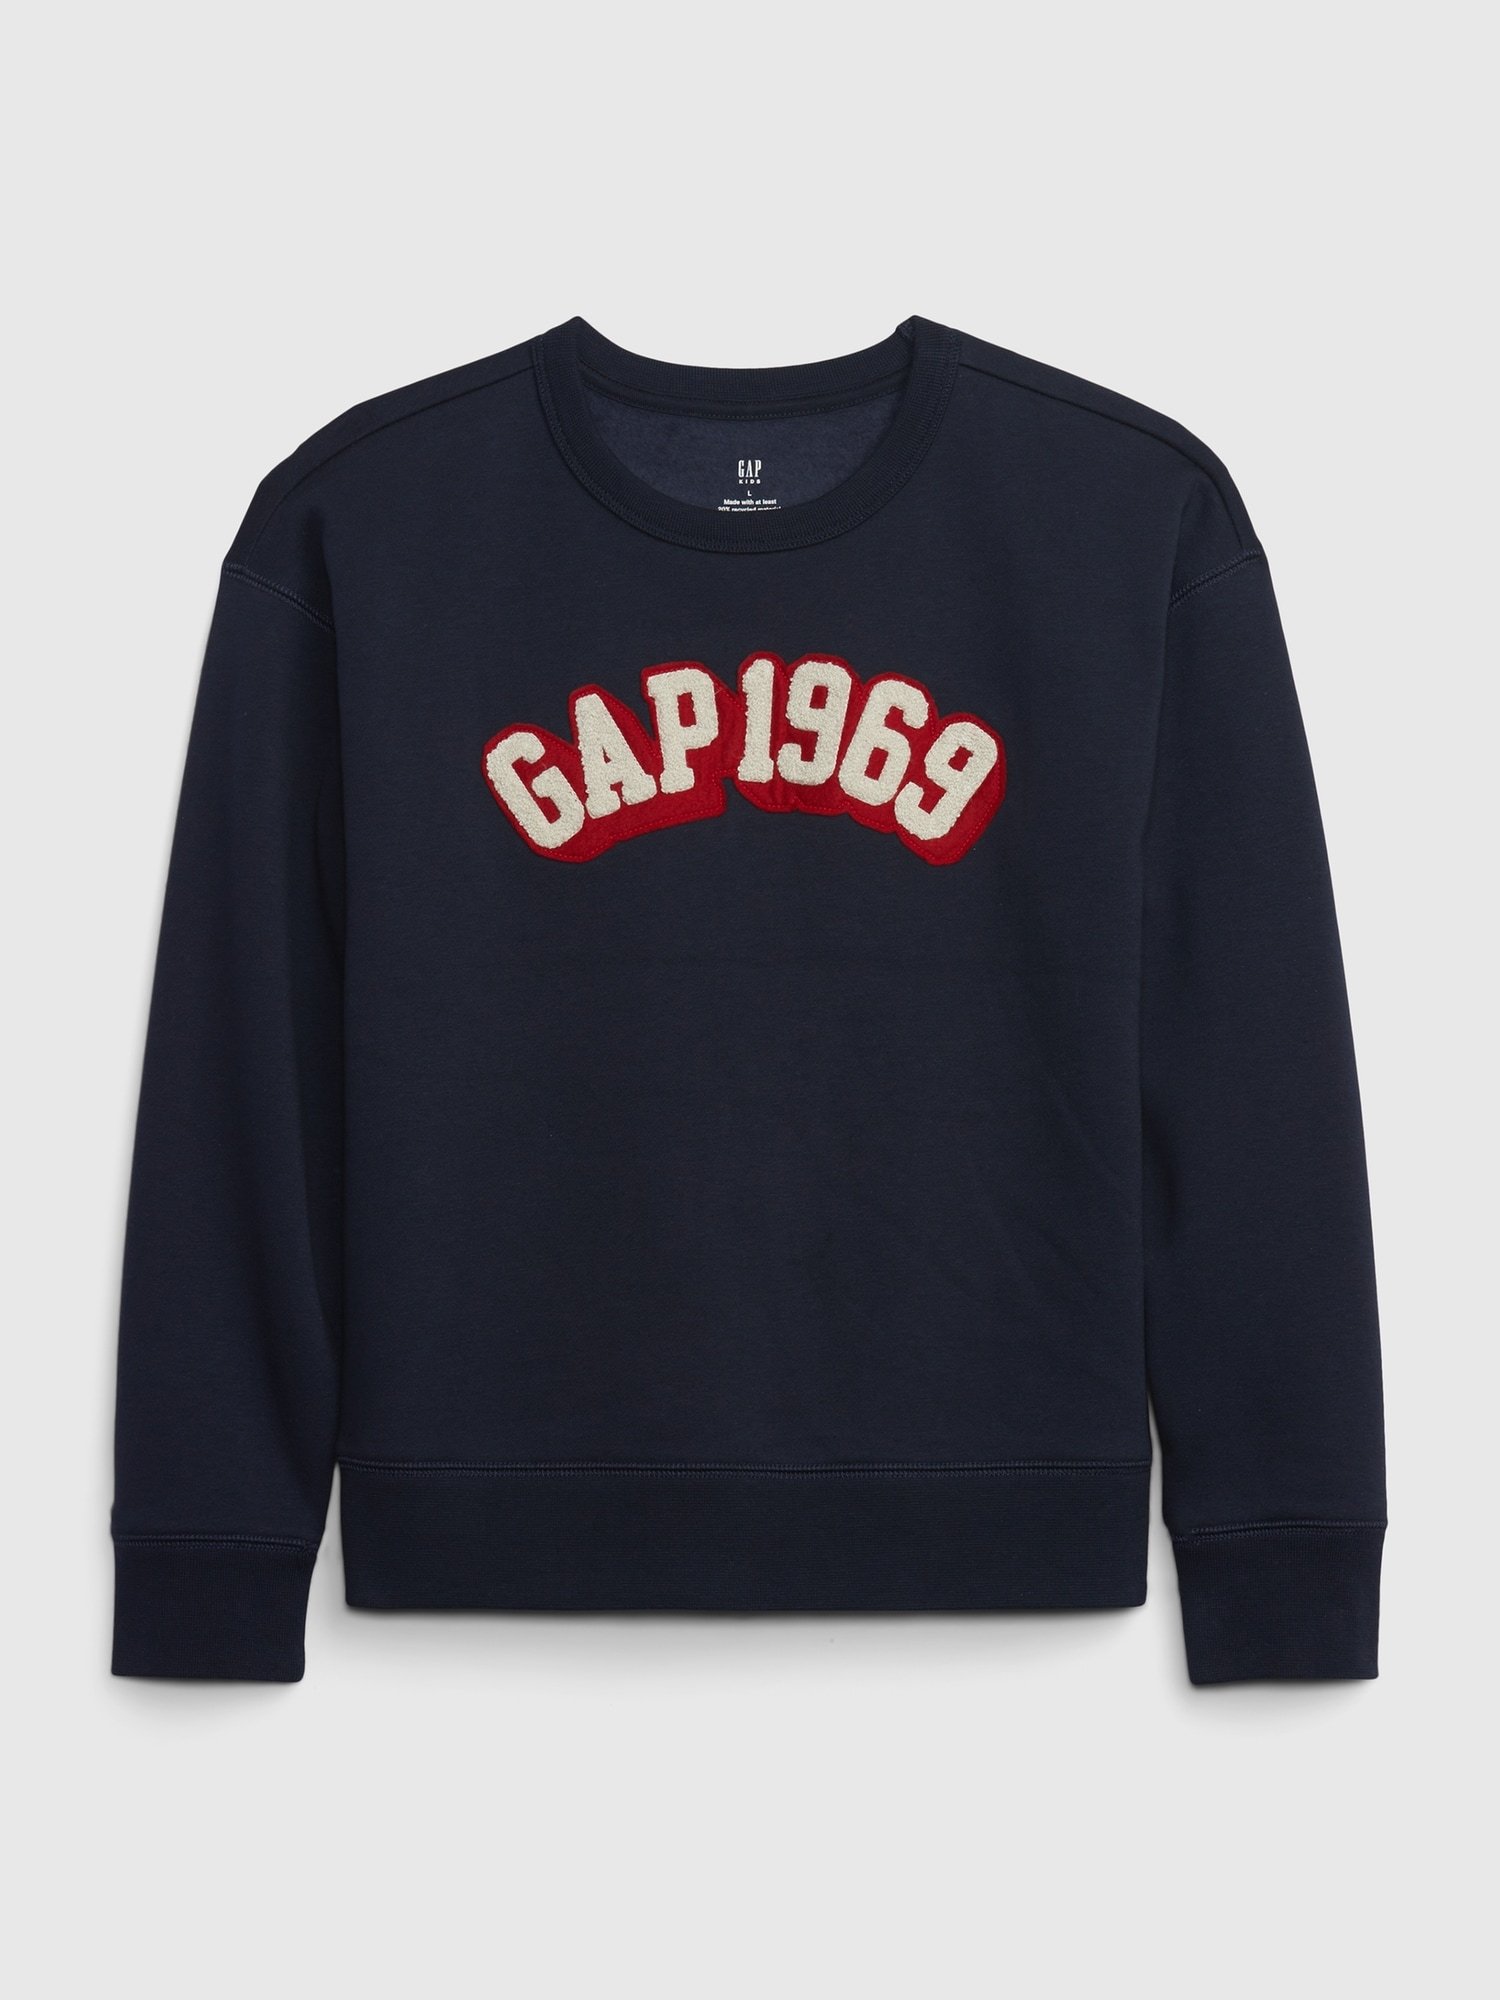 GAP Kids Sweatshirt 1969 - Boys